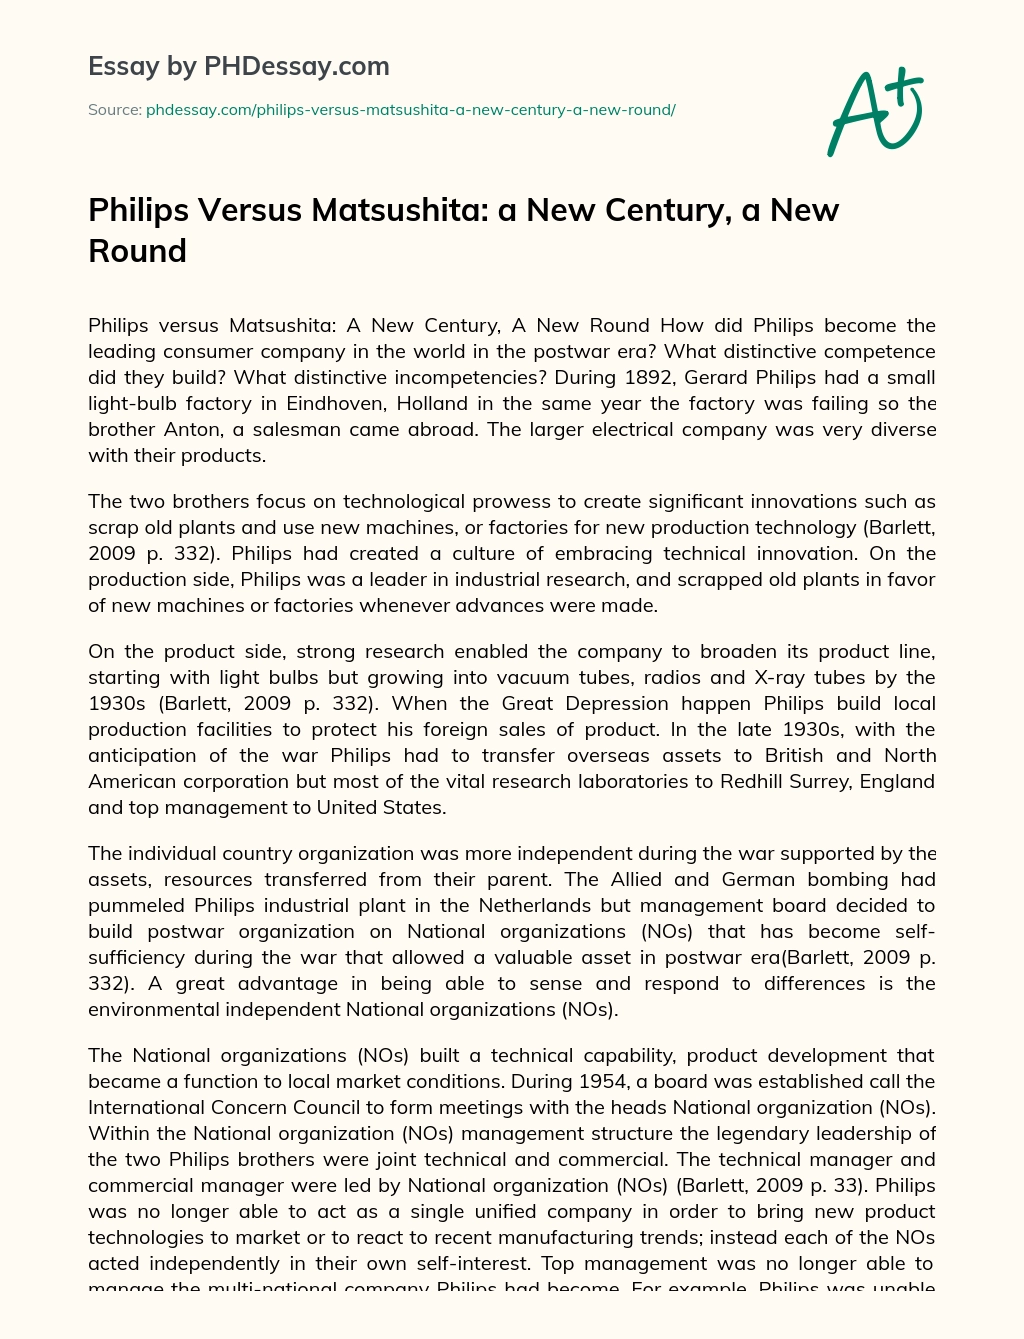 Philips Versus Matsushita: a New Century, a New Round essay